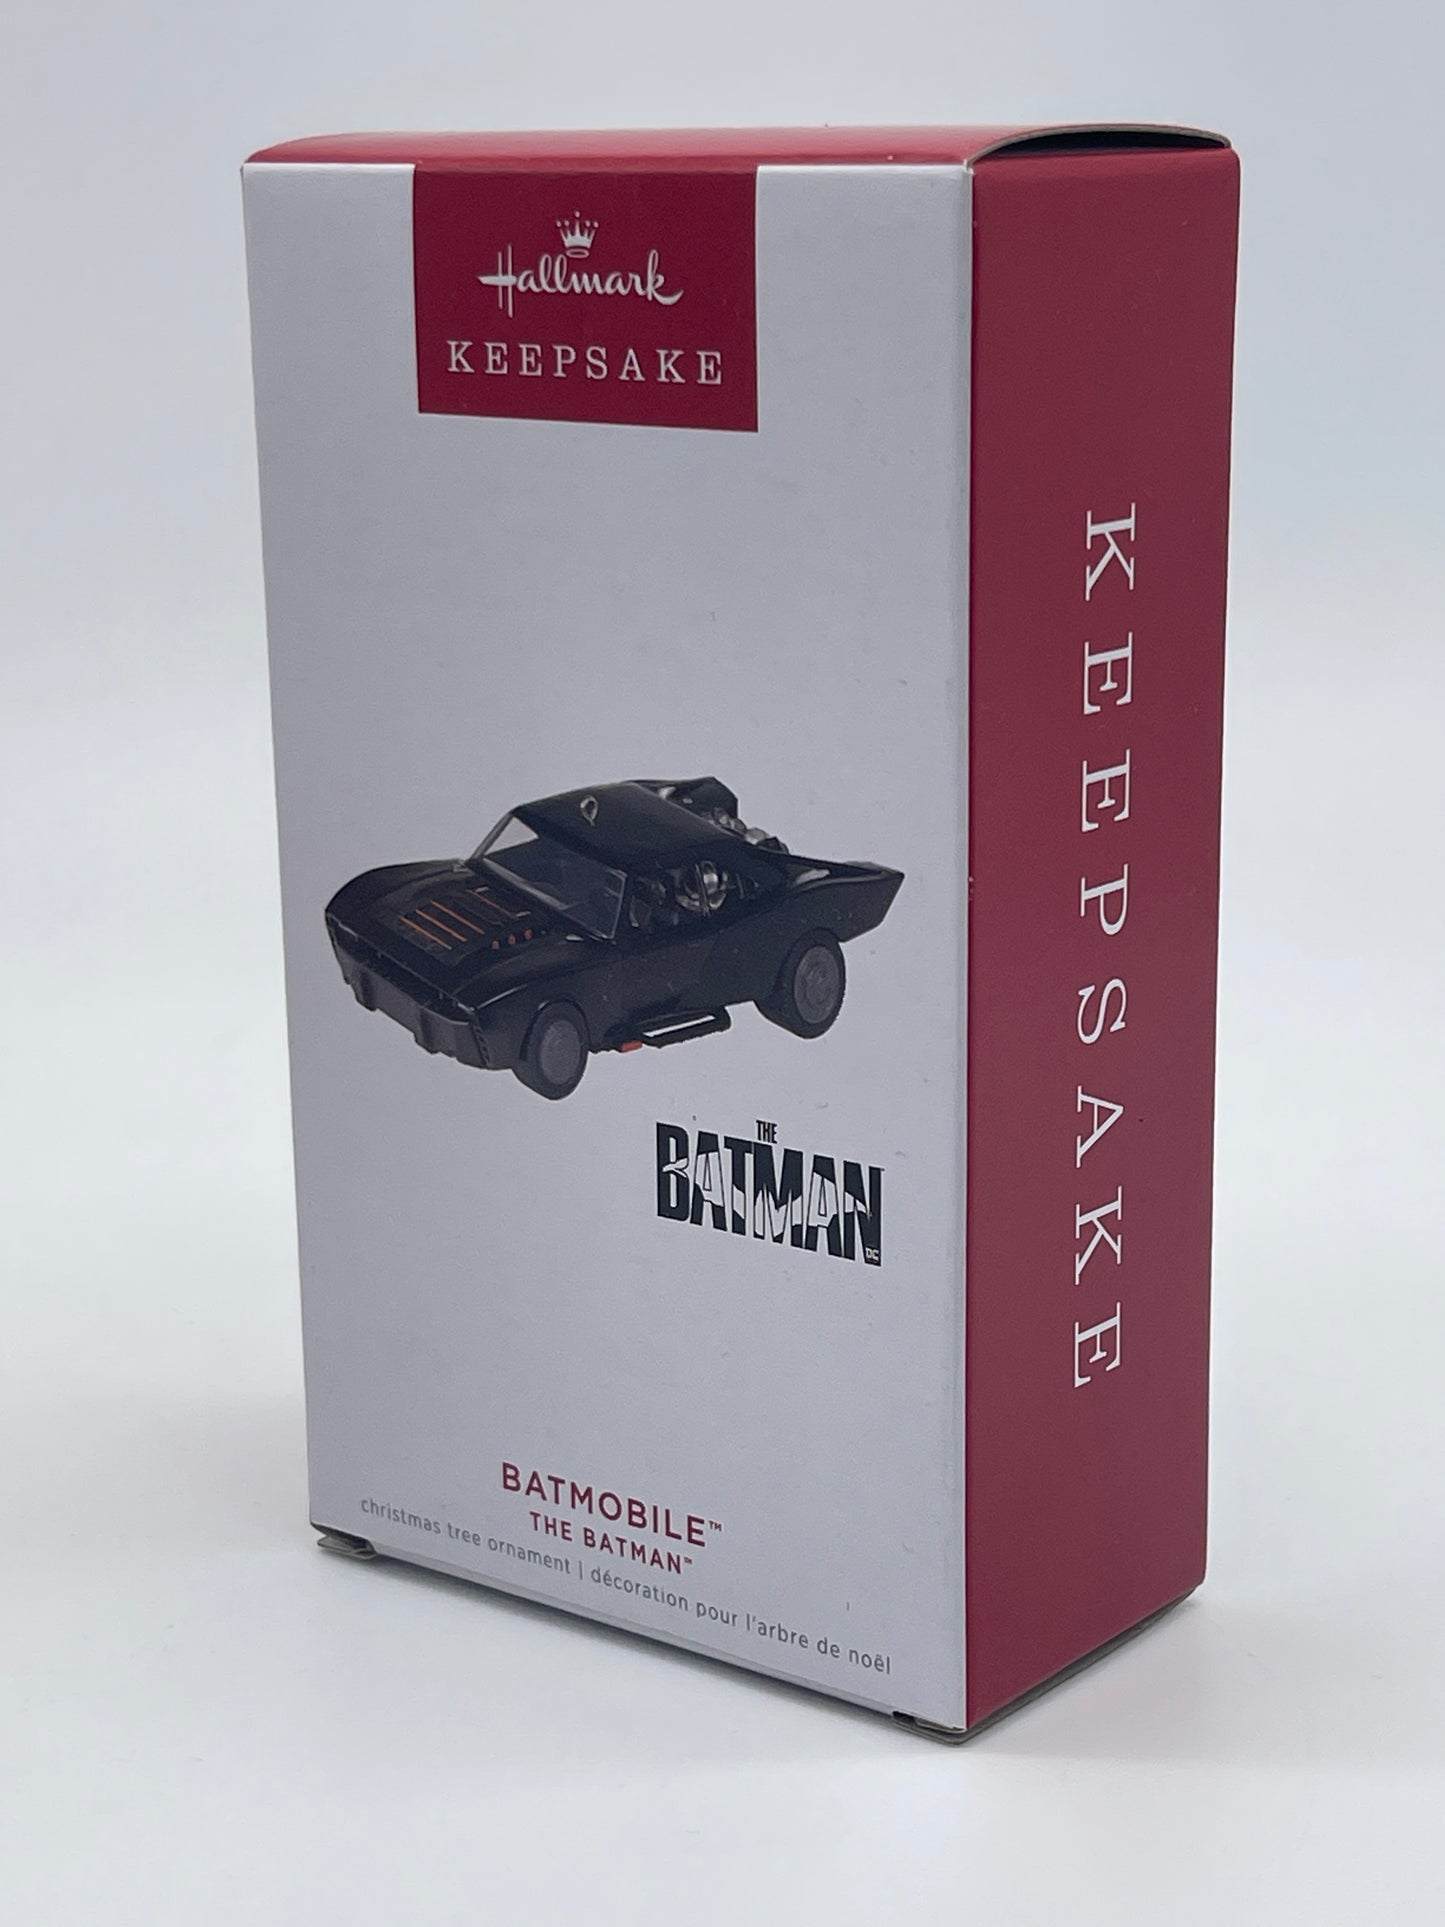 Hallmark Ornaments "The Batman" Batmobile Keepsake (2022)